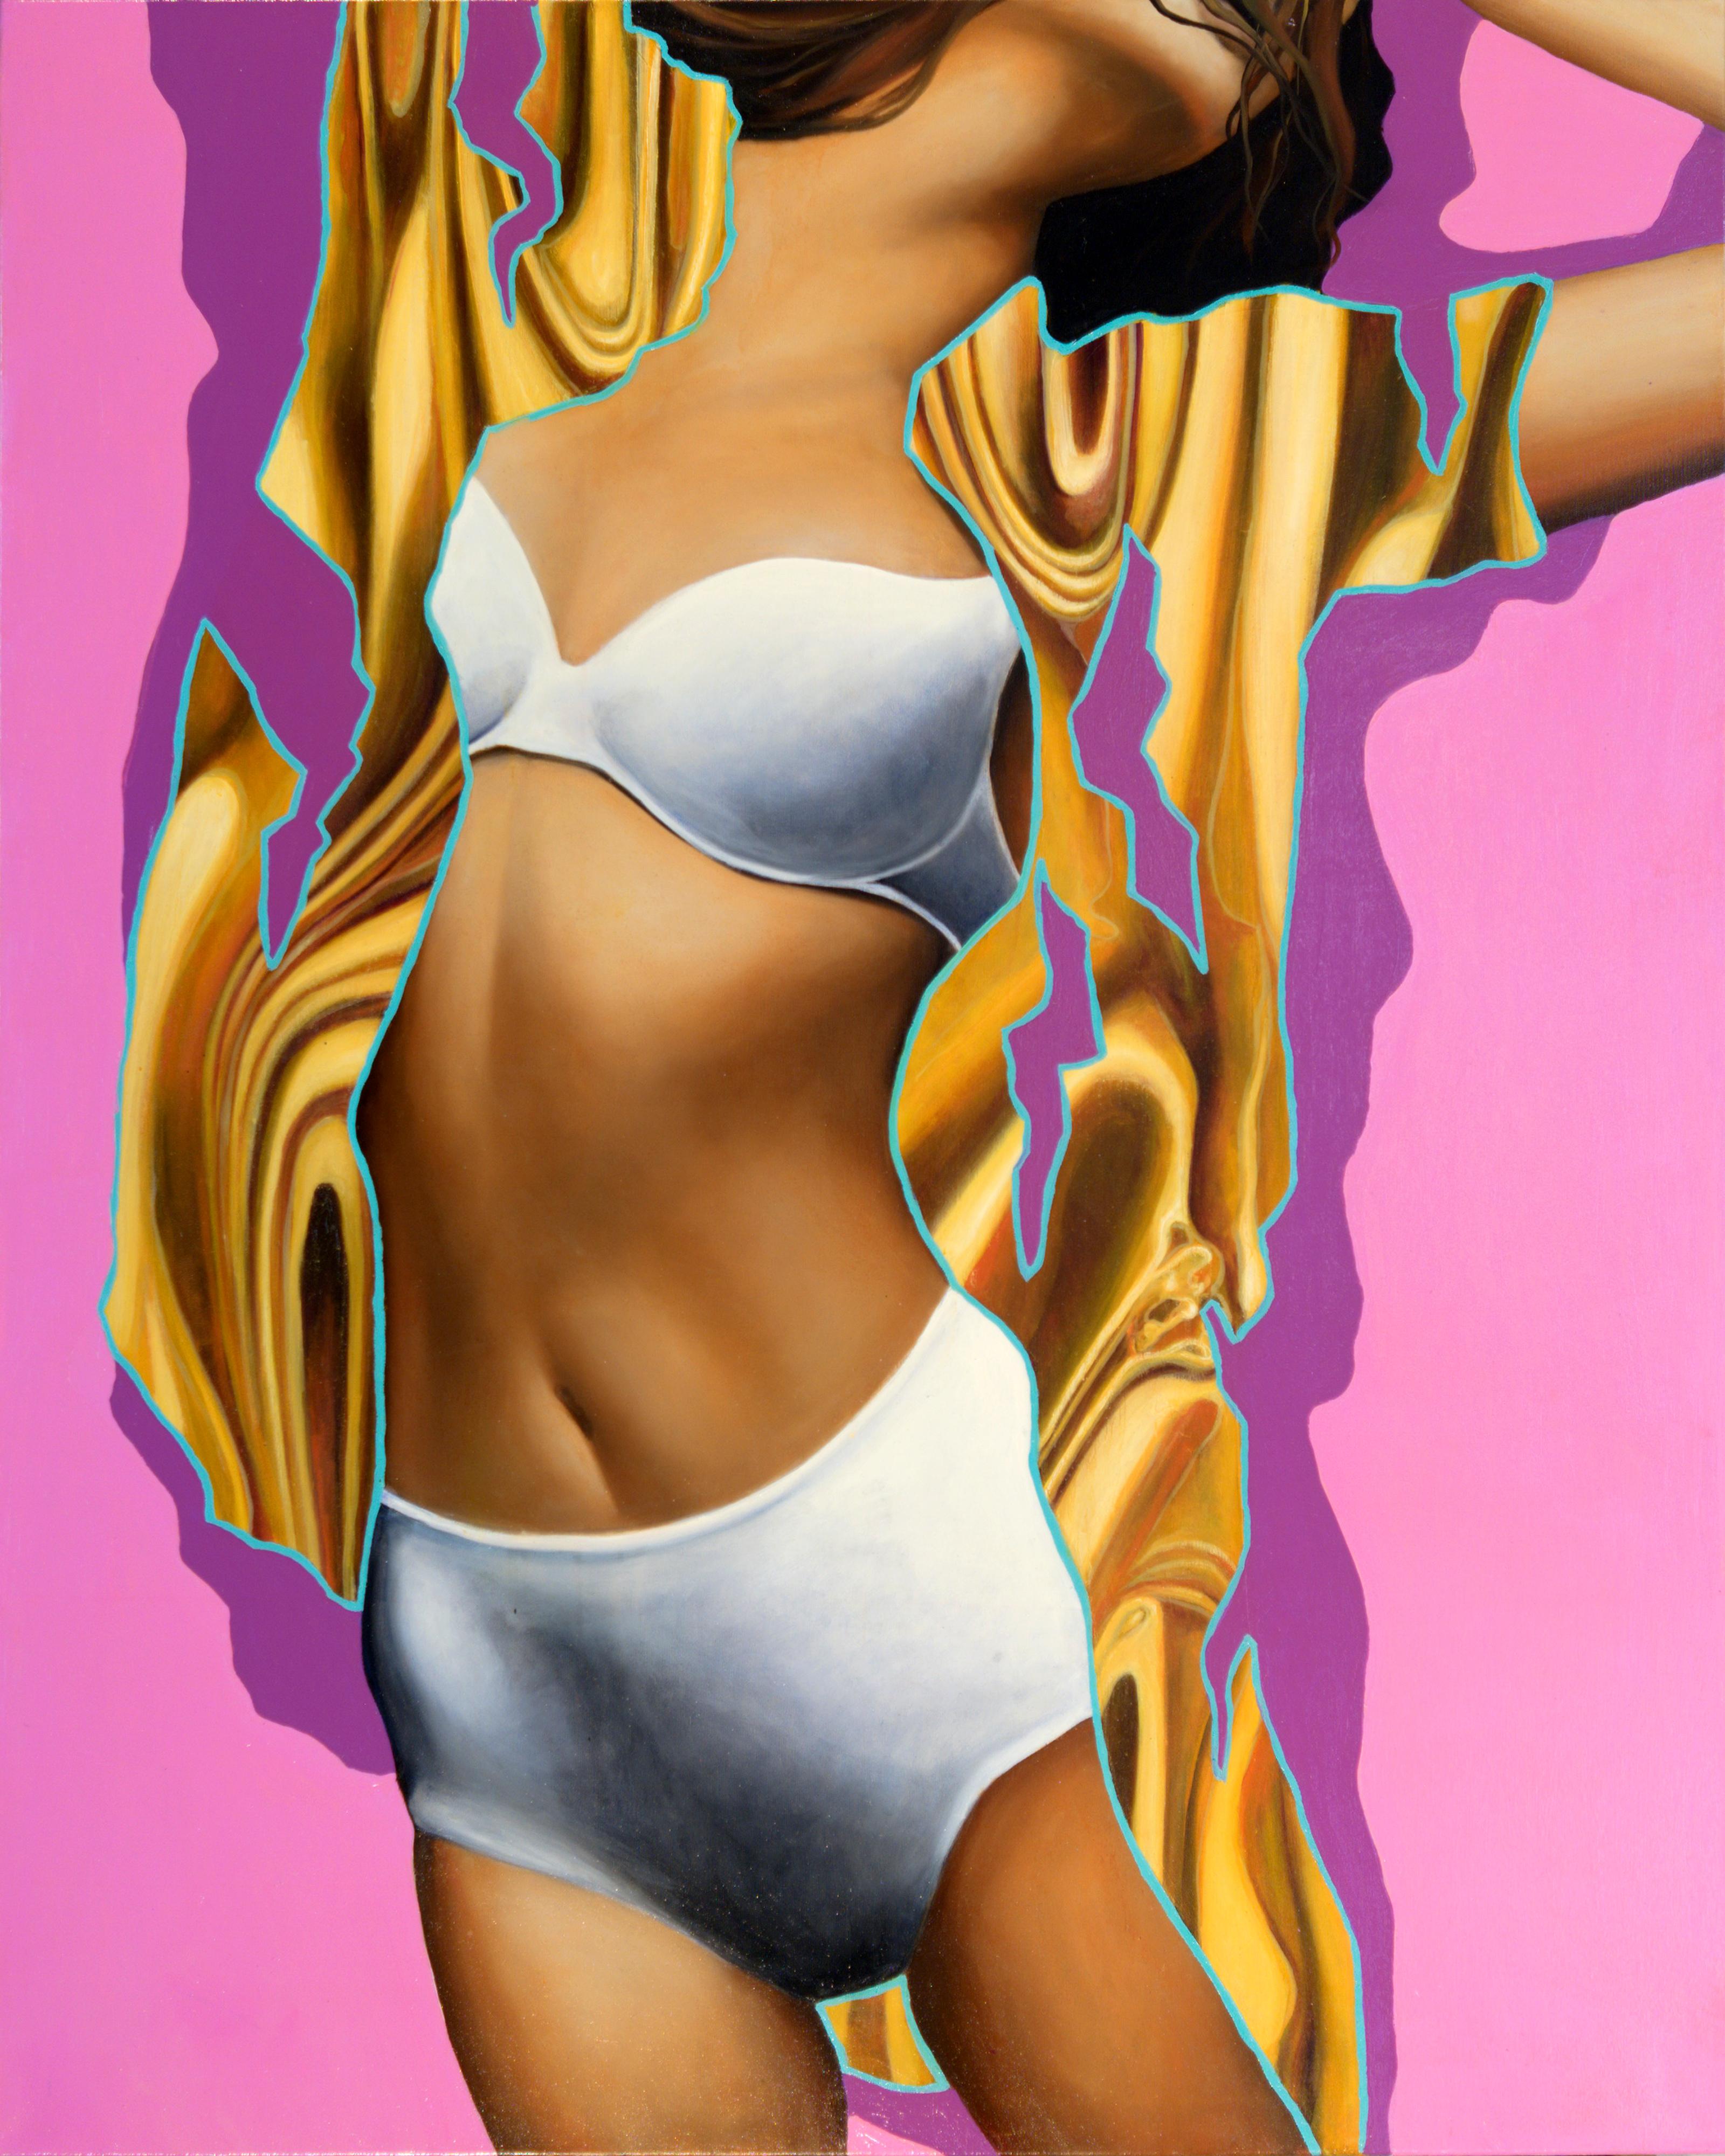 Manzur Kargar Figurative Painting - Dancing 2 - Contemporary, Pop Art, figurative, nude, female Portrait, dancing